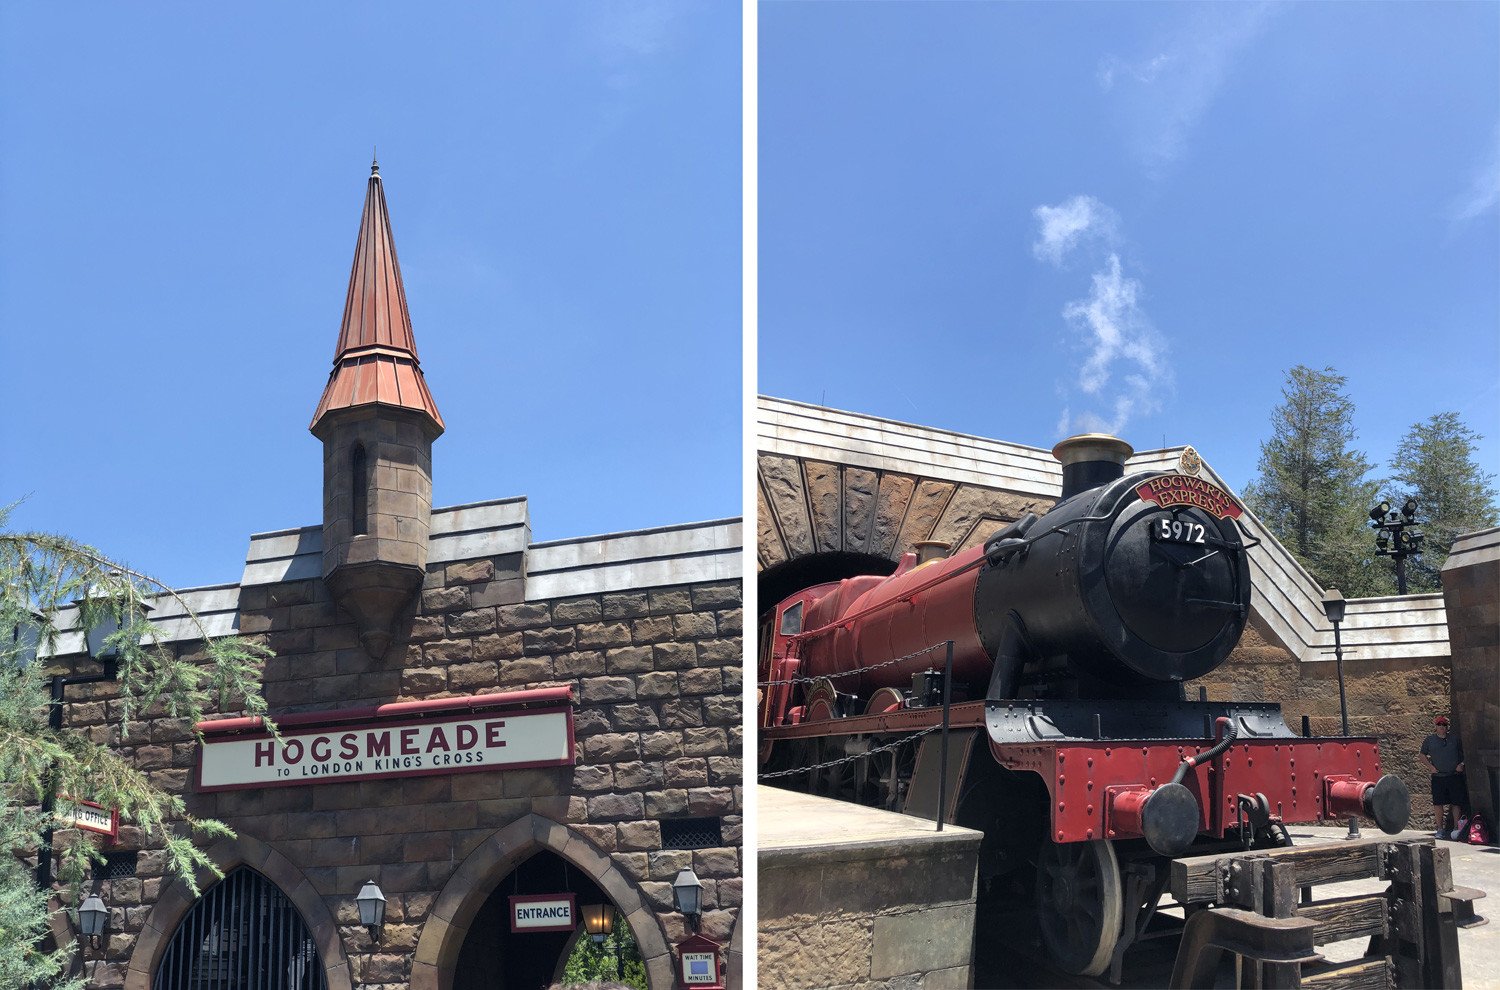 Hogsmeade Station / The Wizarding World of Harry Potter, Orlando